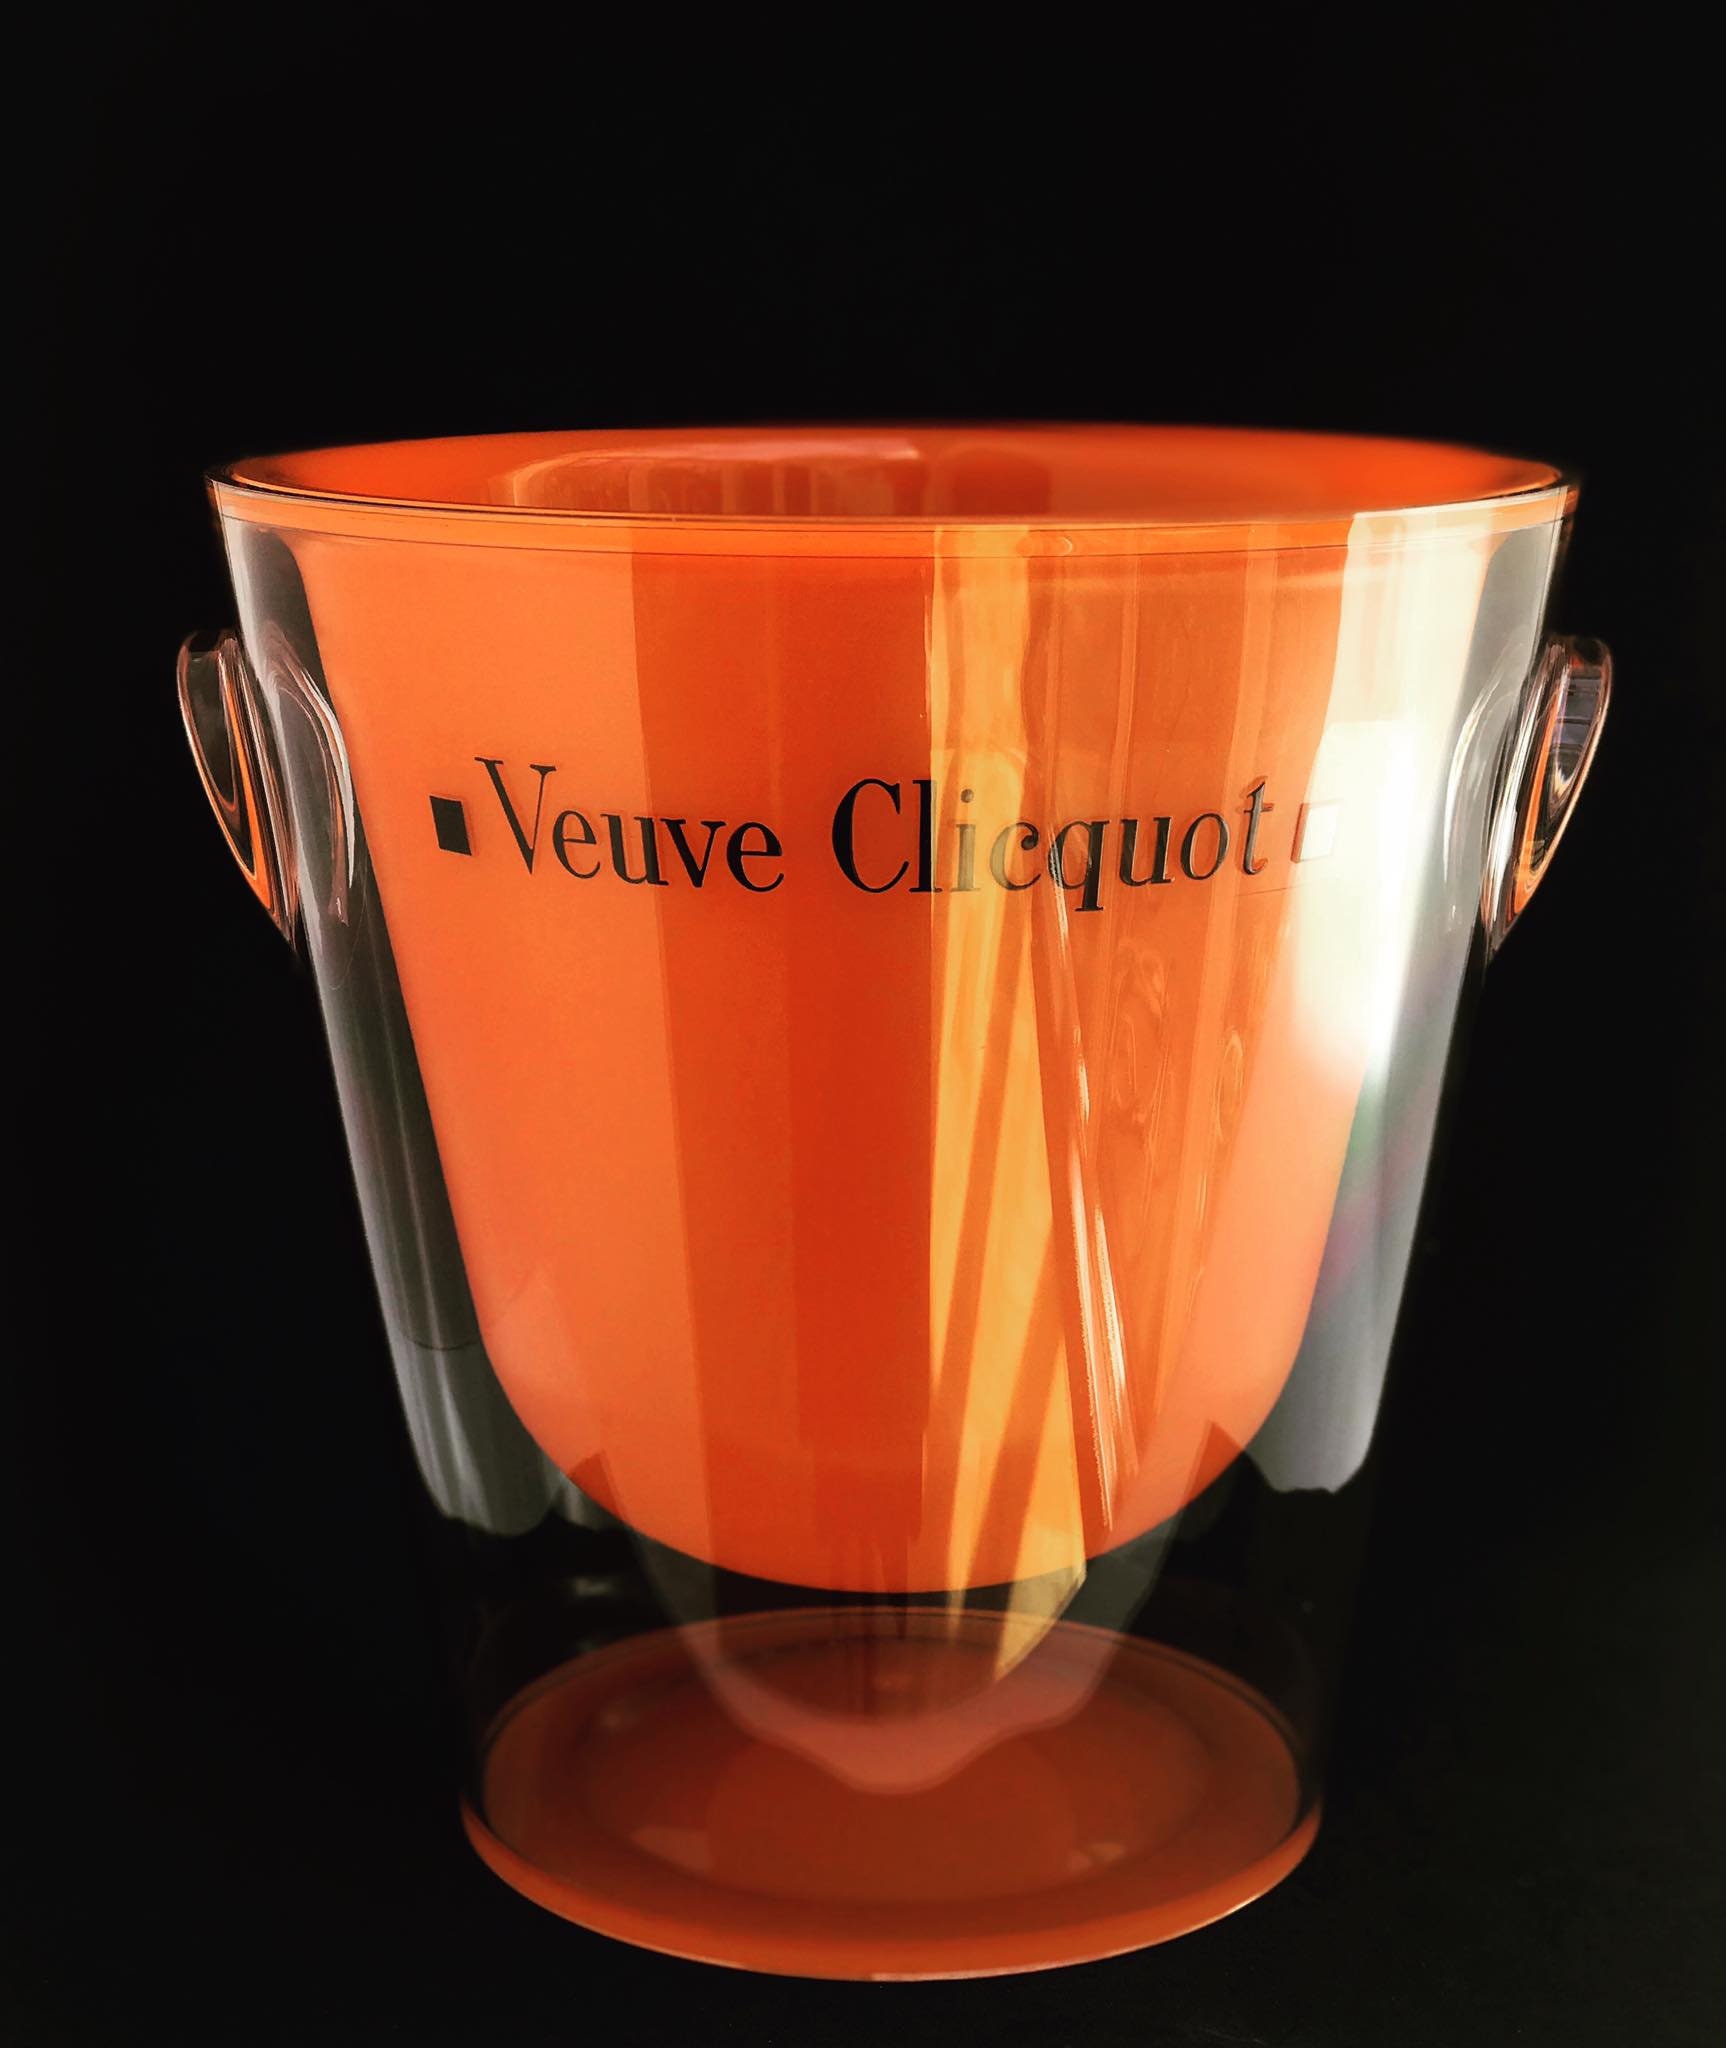 Veuve Clicquot Veuve clicquot champagne orange ice bucket 